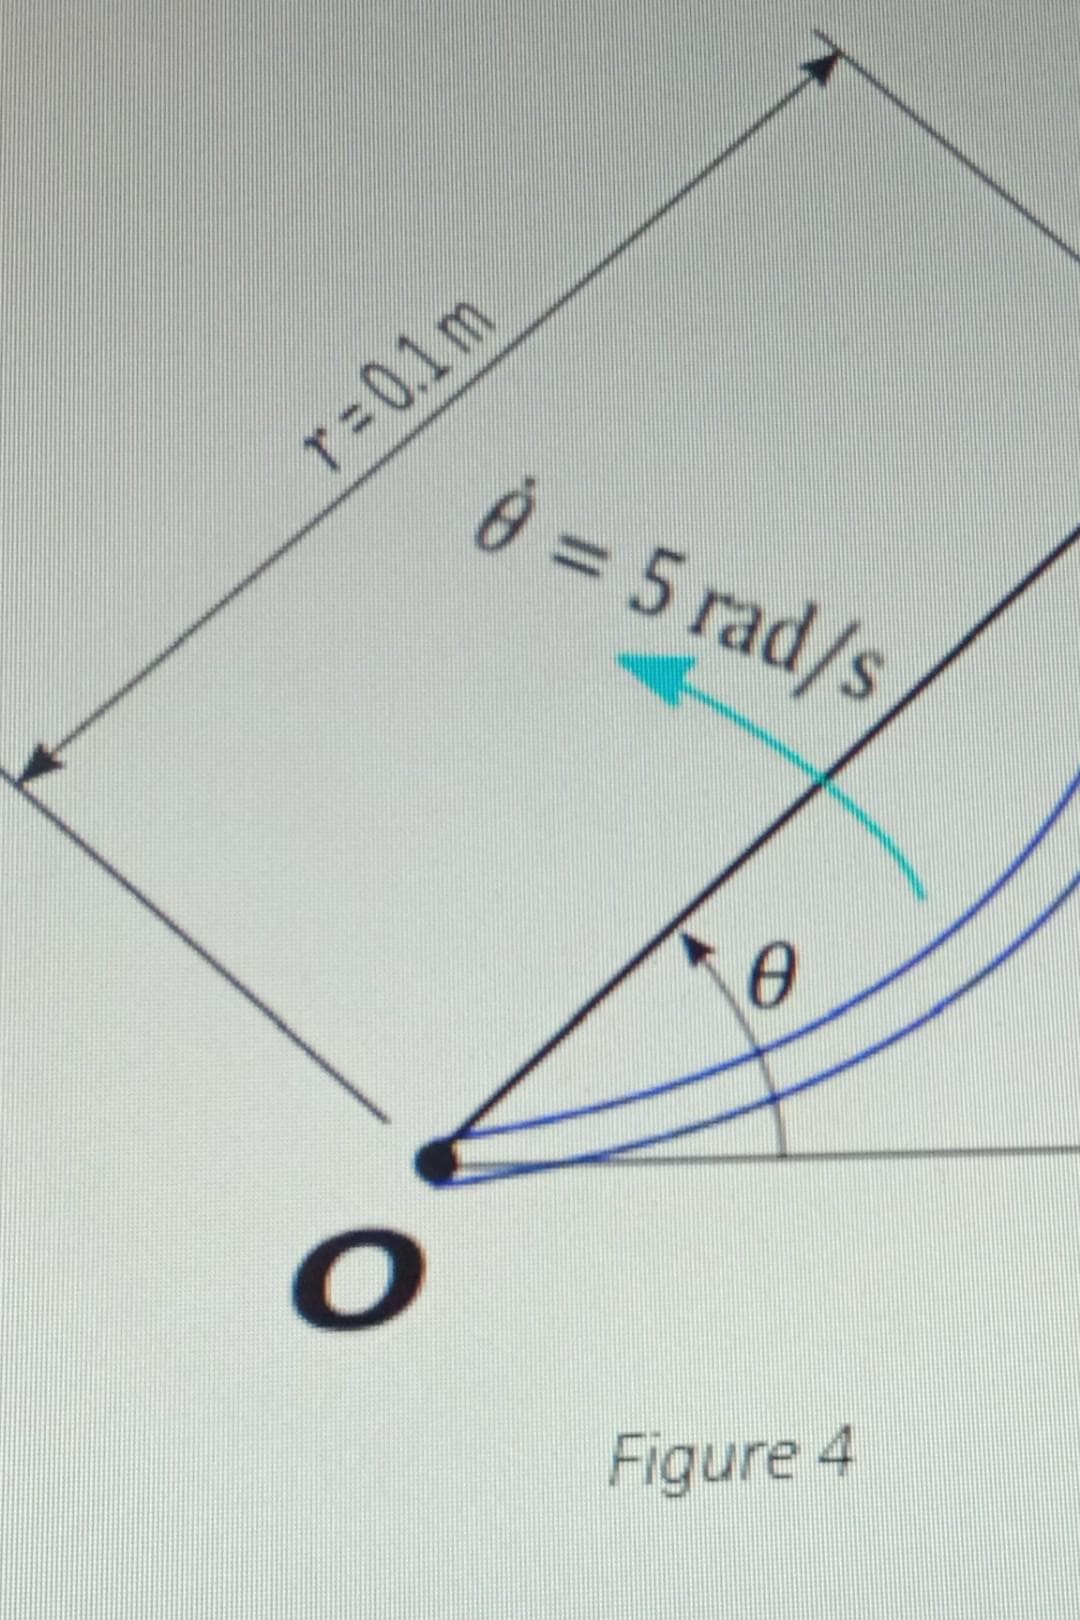 r=0.1m
O
8 = 5 rad/s
0
Figure 4